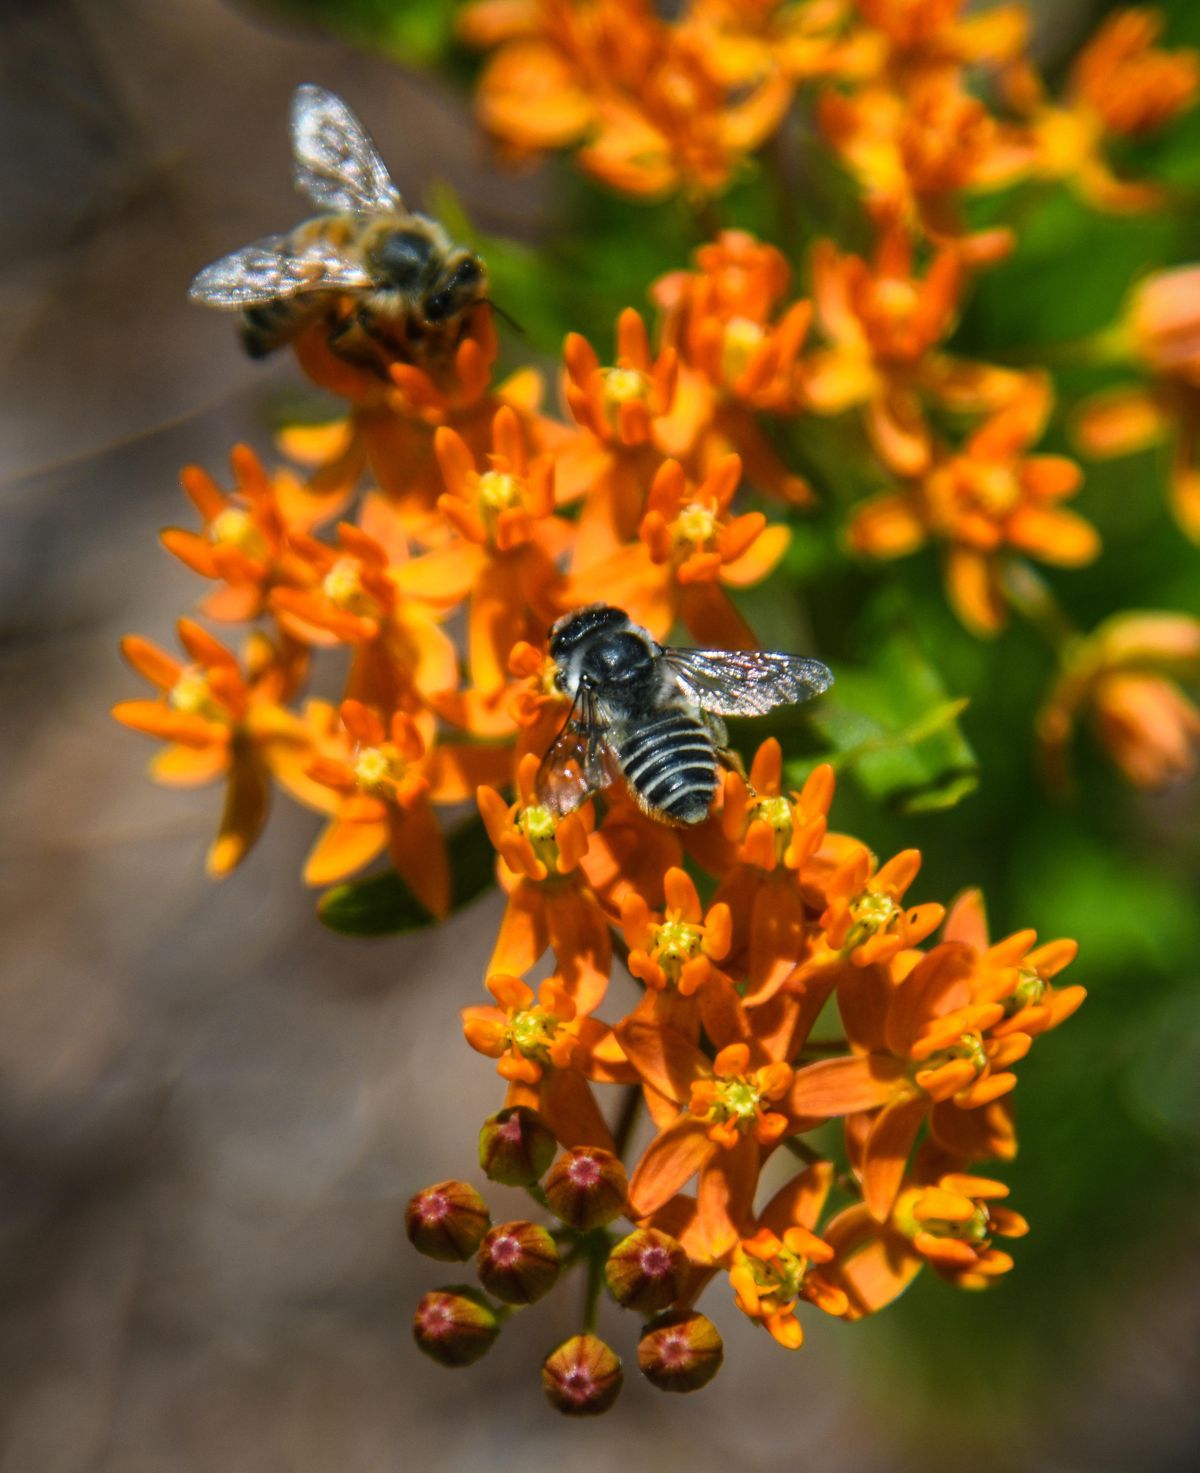 Bees are abundant around Juliane Mora’s drought-resistant plants. (Dan Pelle / The Spokesman-Review)